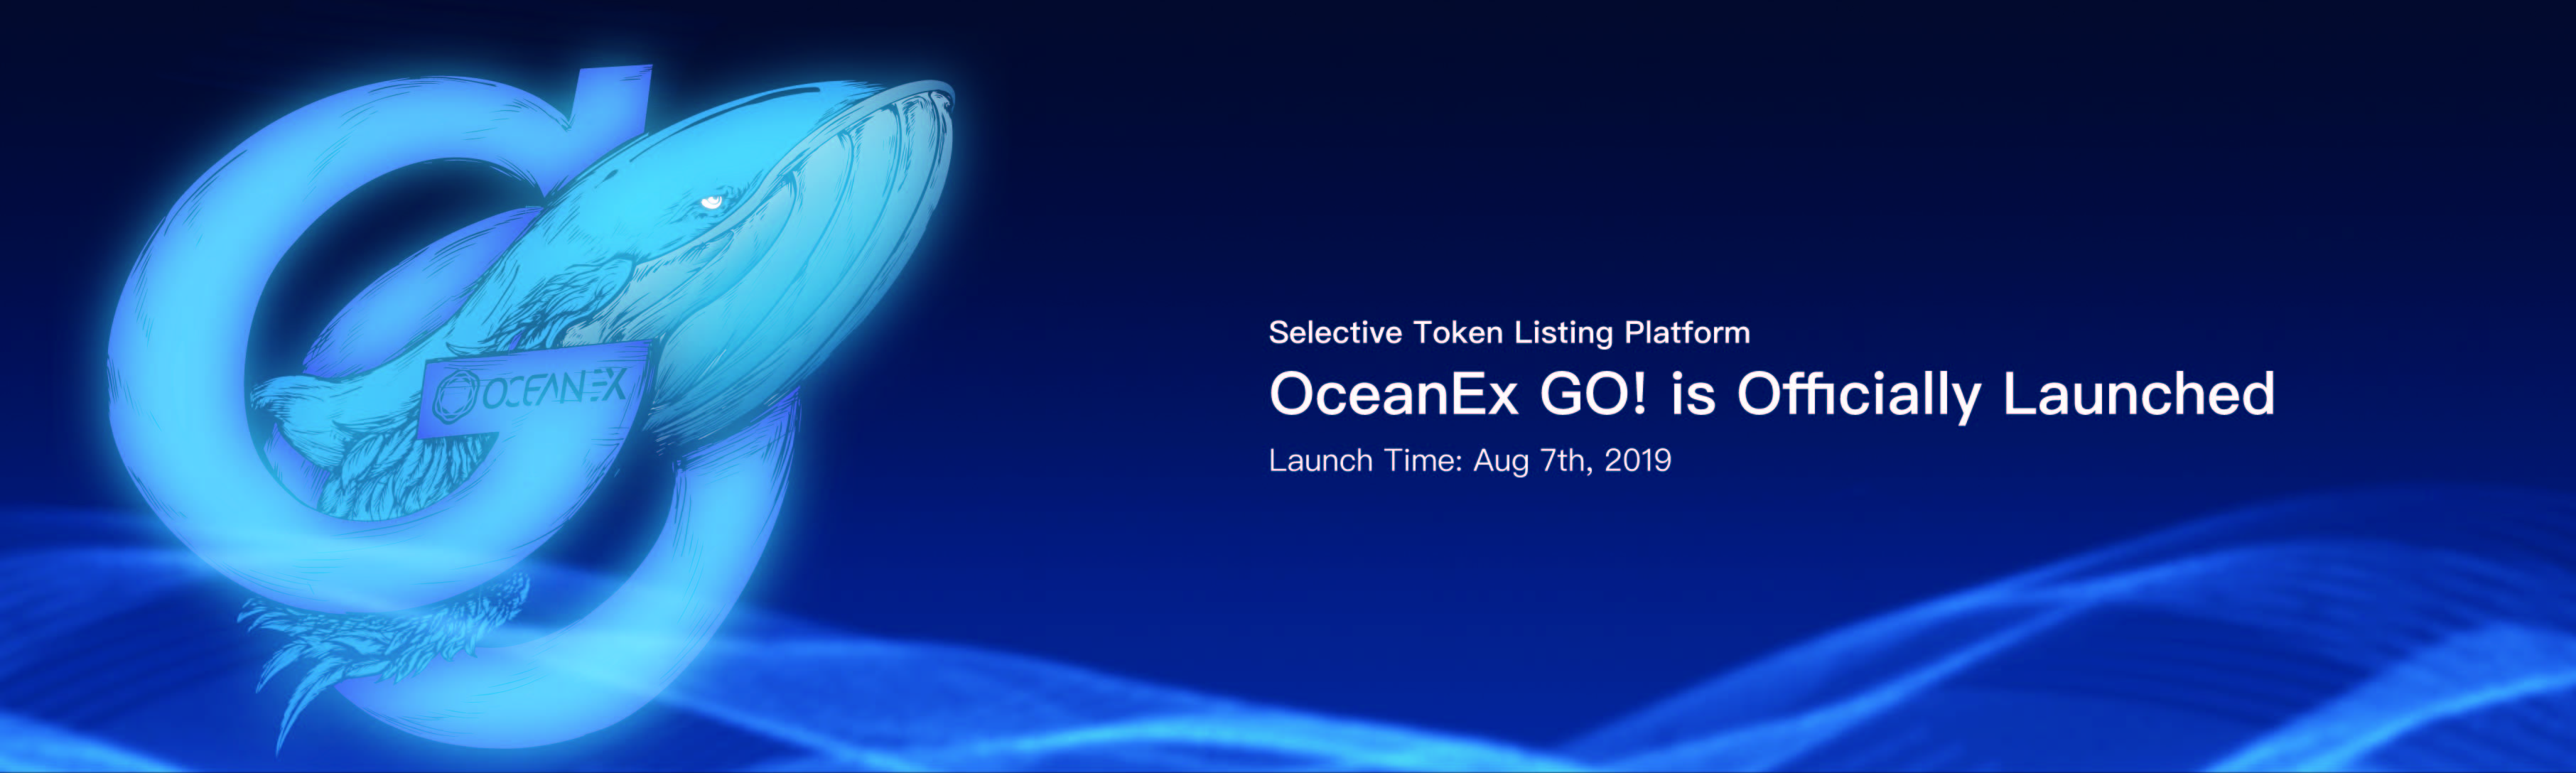 Selective Token Listing Platform OceanEx GO! is